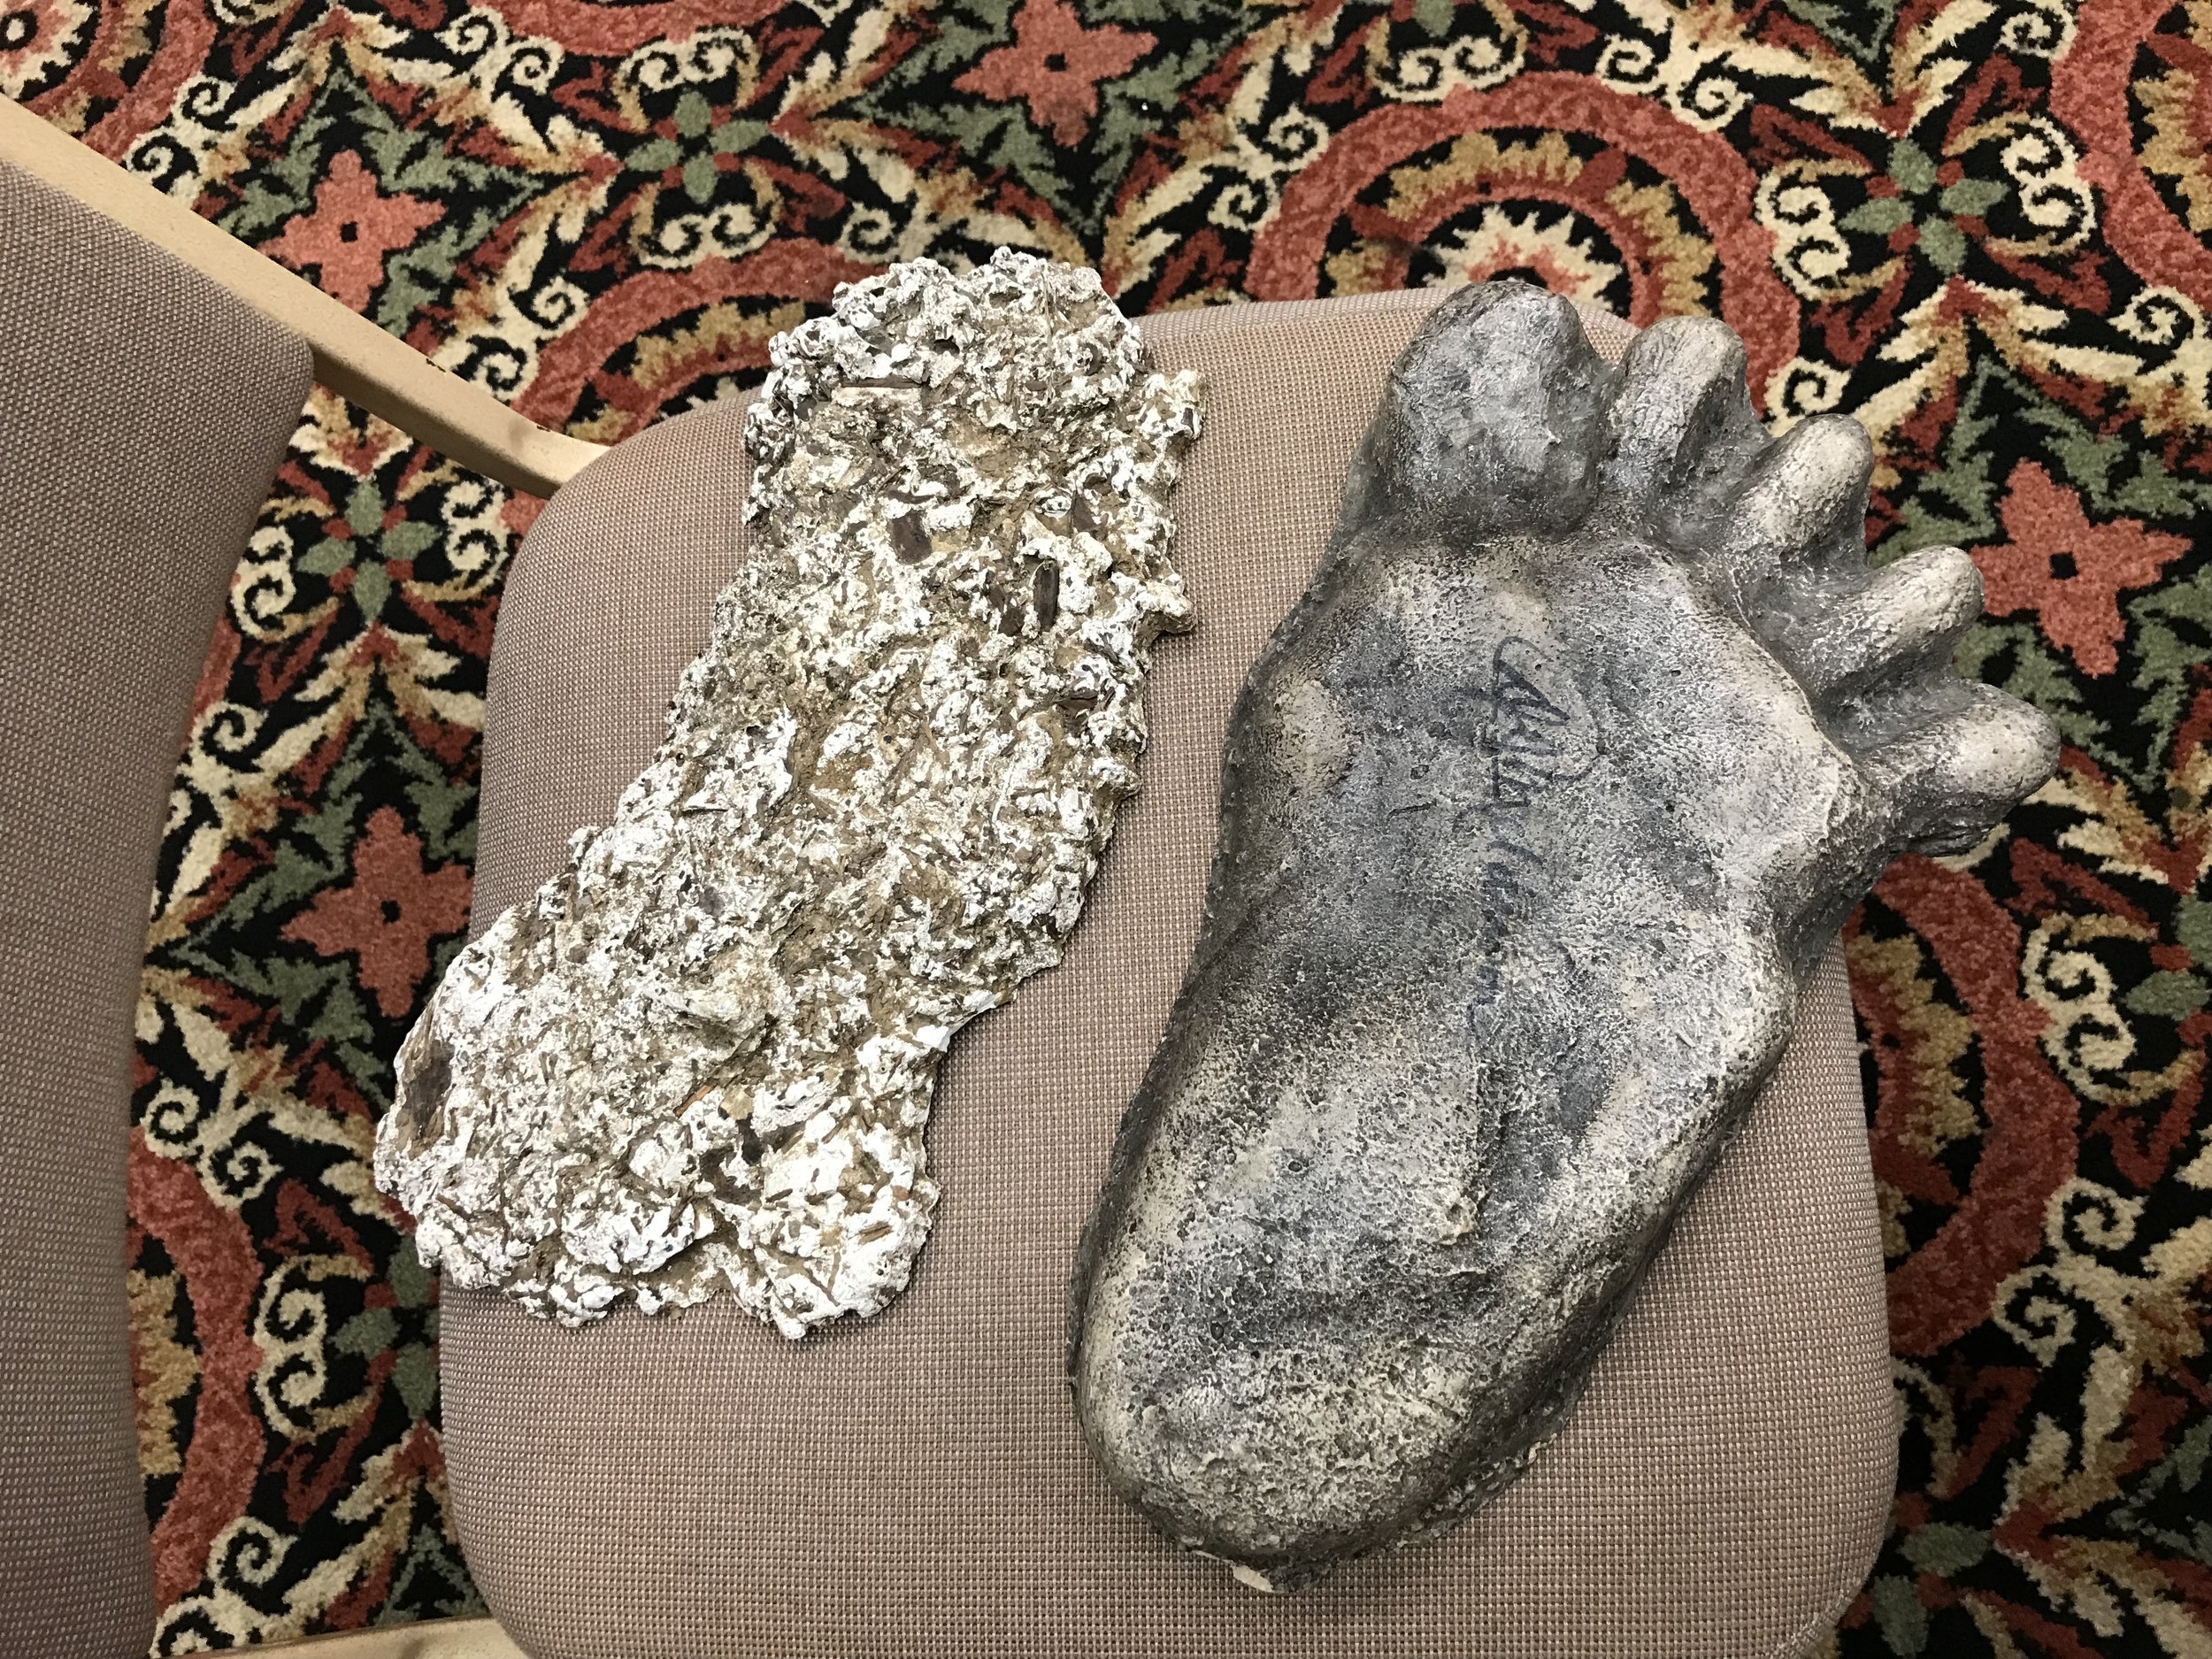  An actual Bigfoot cast alongside an original footprint cast copy that  Jeffrey  brought as props. 